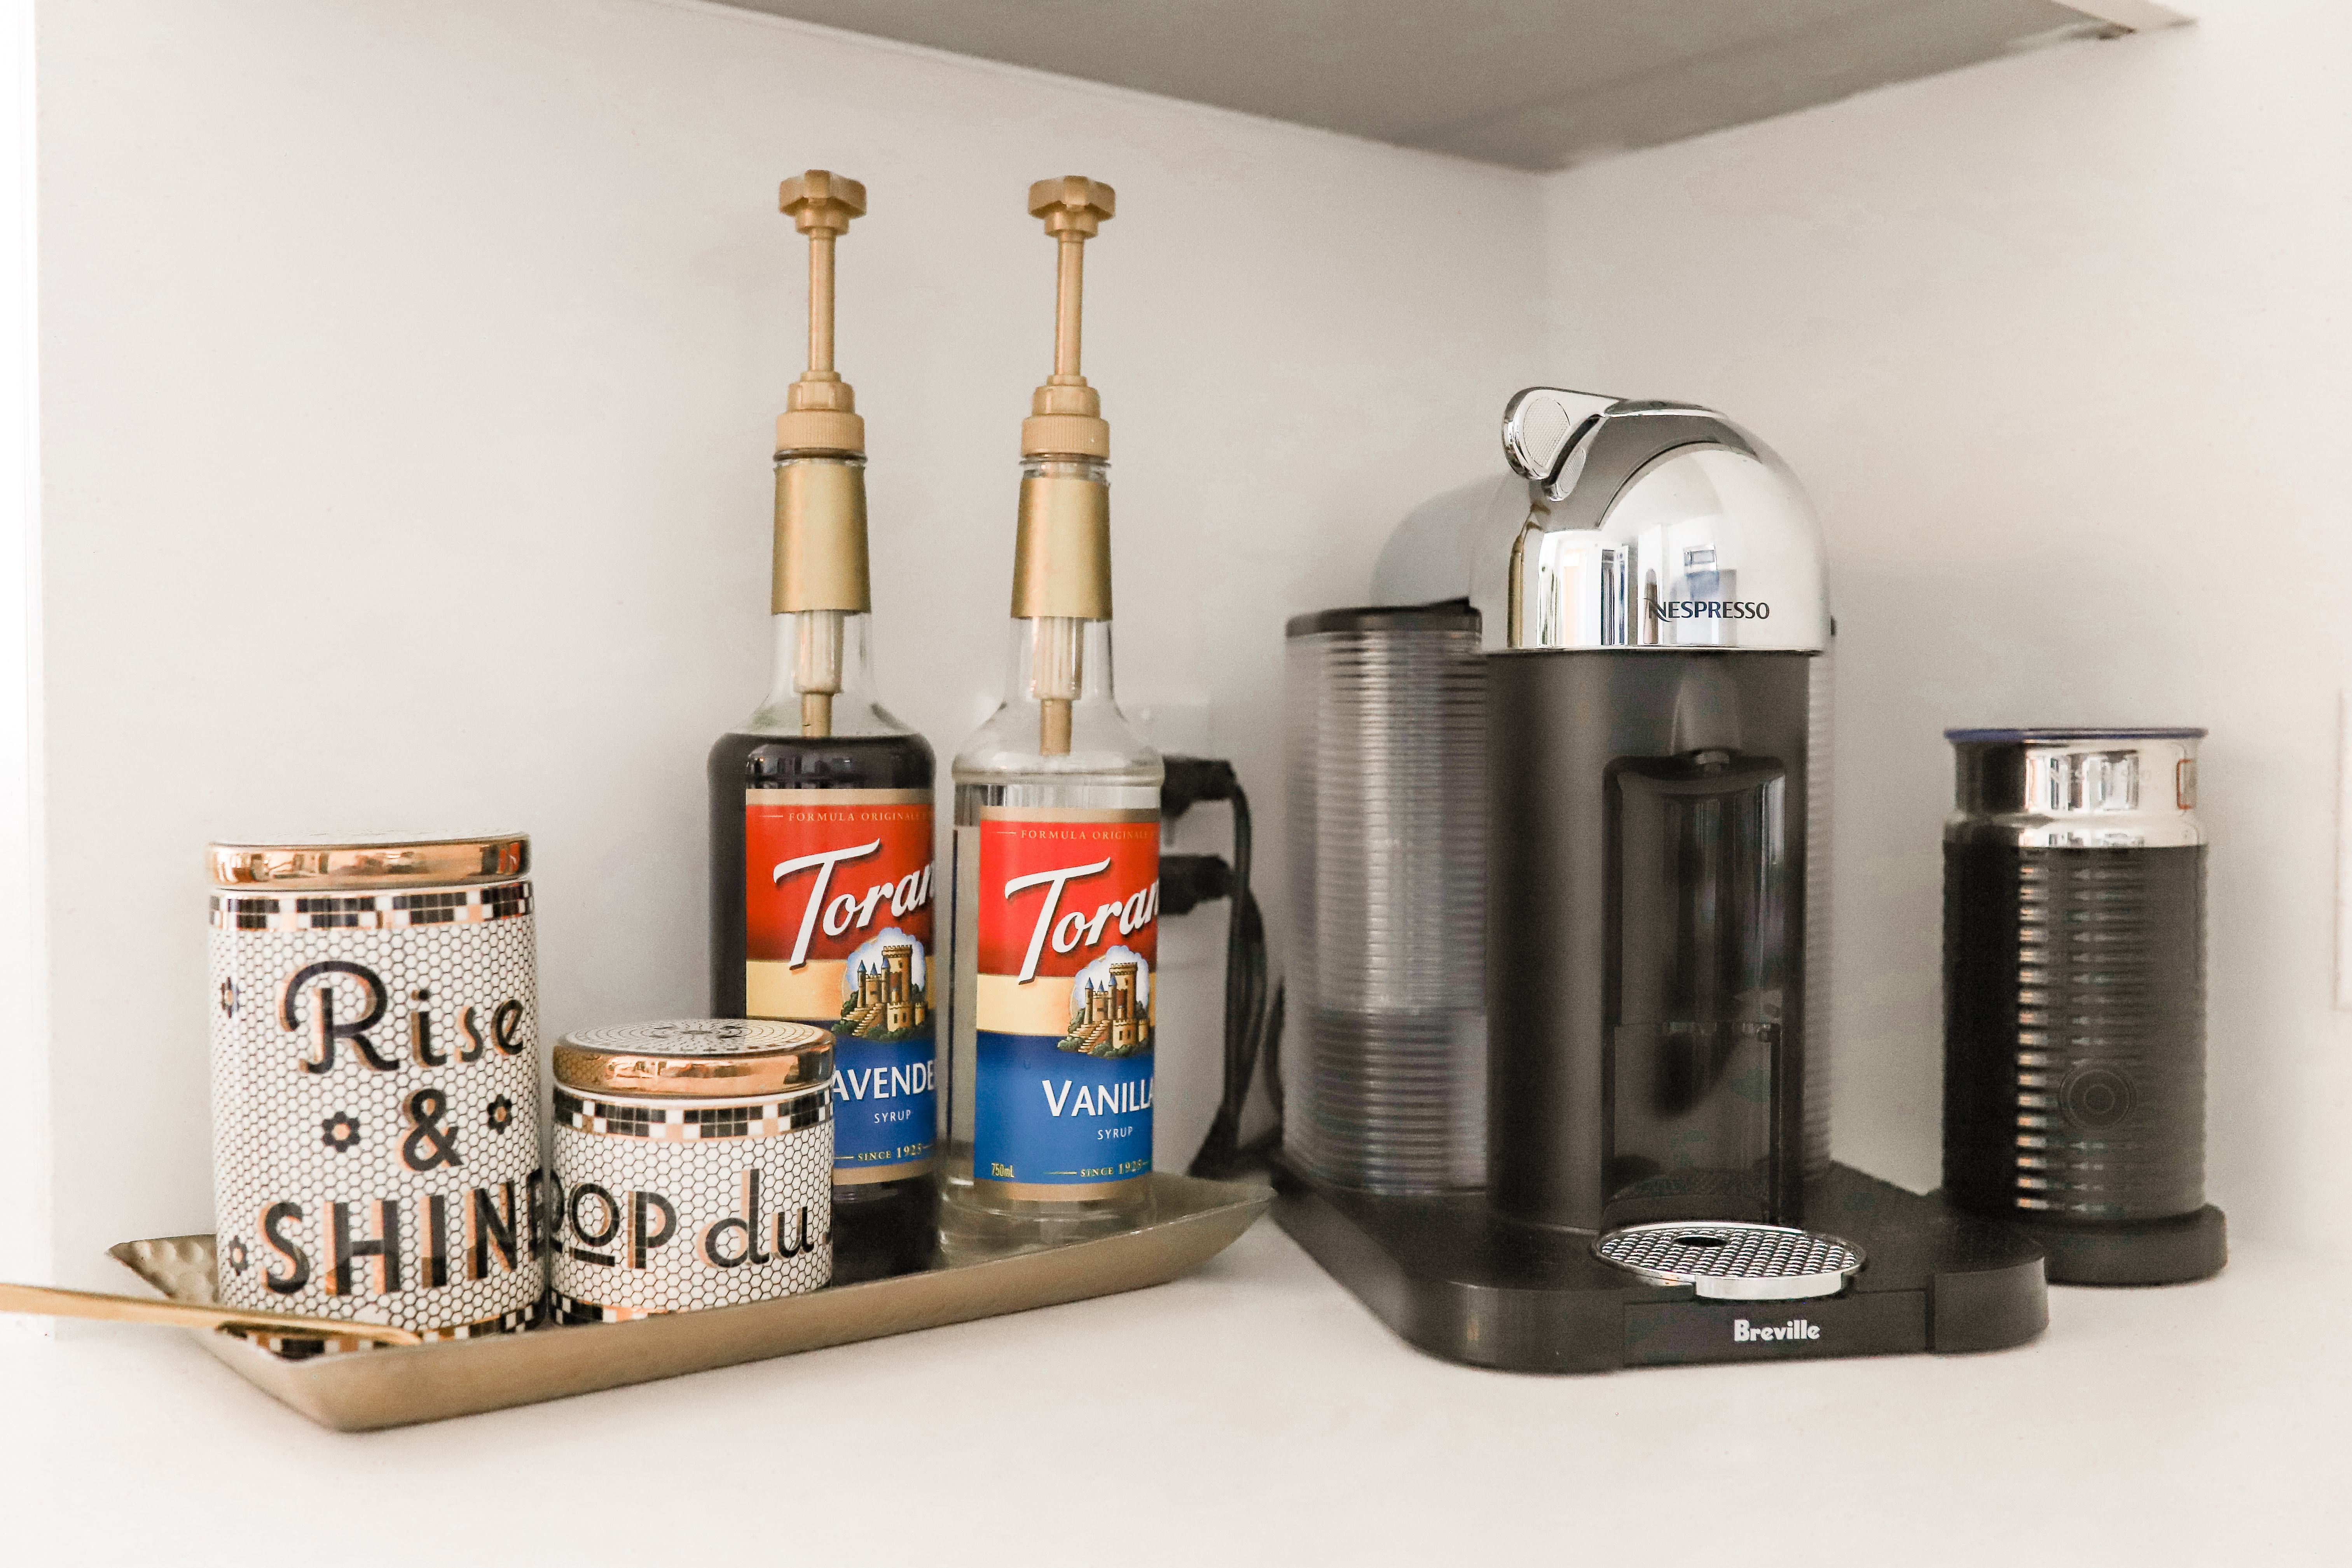 Nespresso machine and coffee syrups.